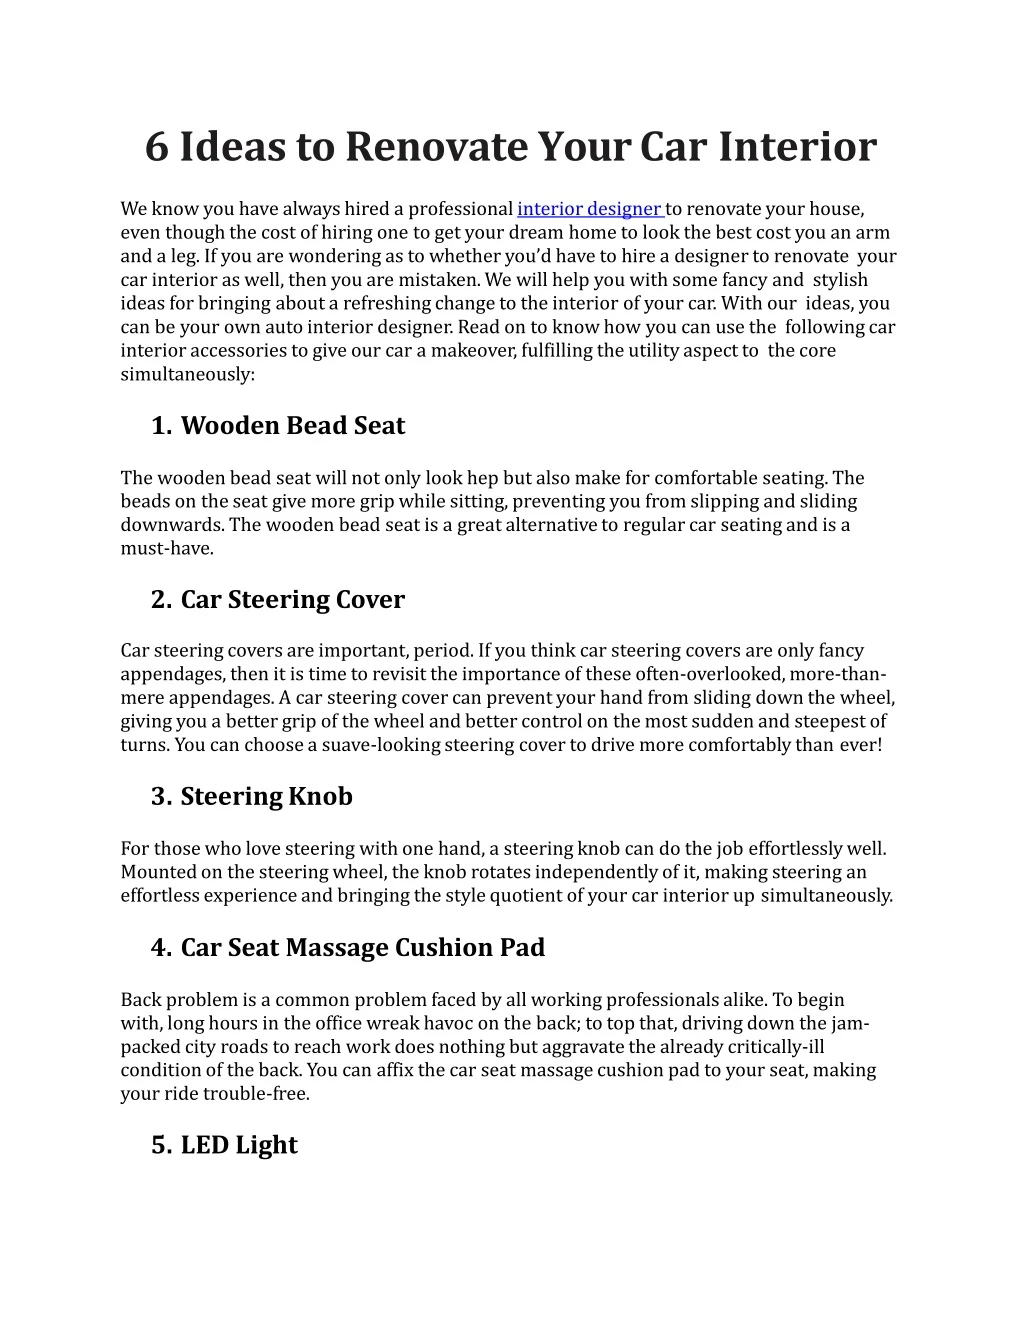 6 ideas to renovate your car interior